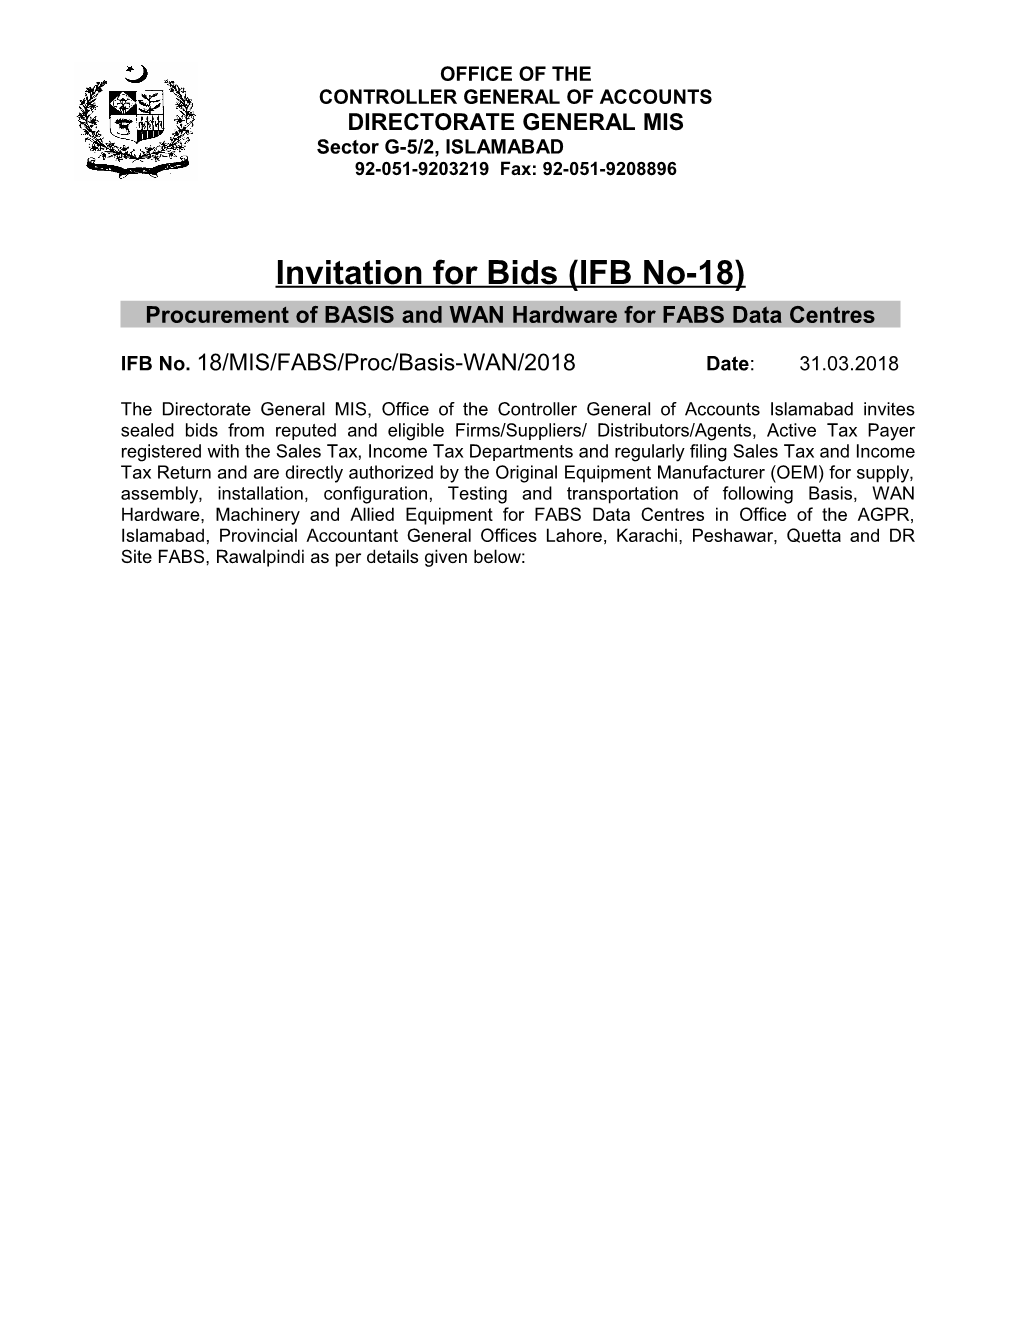 Invitation for Bids (IFB No-18)